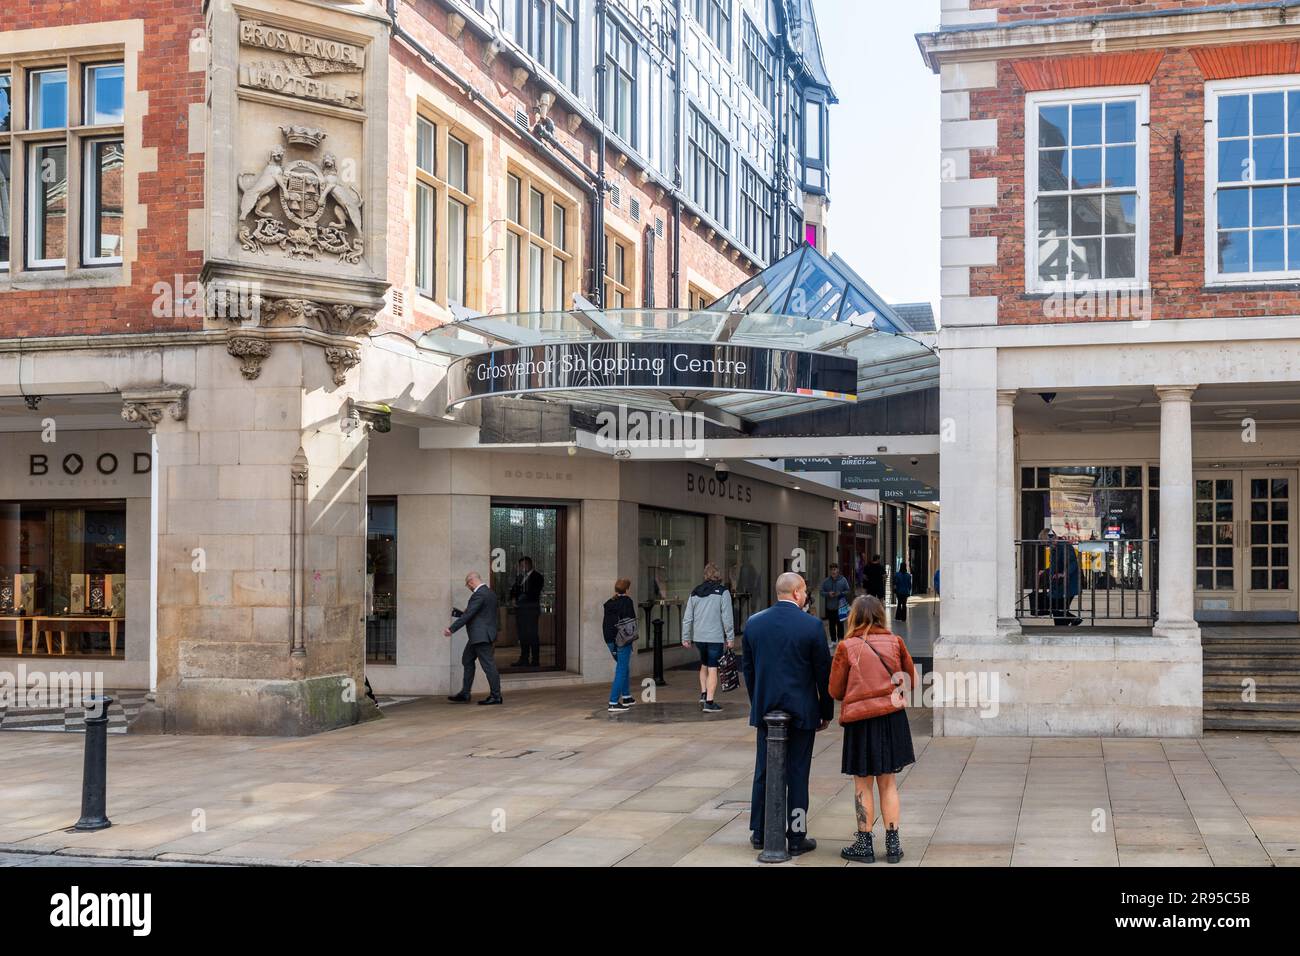 Entrance to Grosvenor Shopping Centre, Chester, Cheshire, UK. Stock Photo